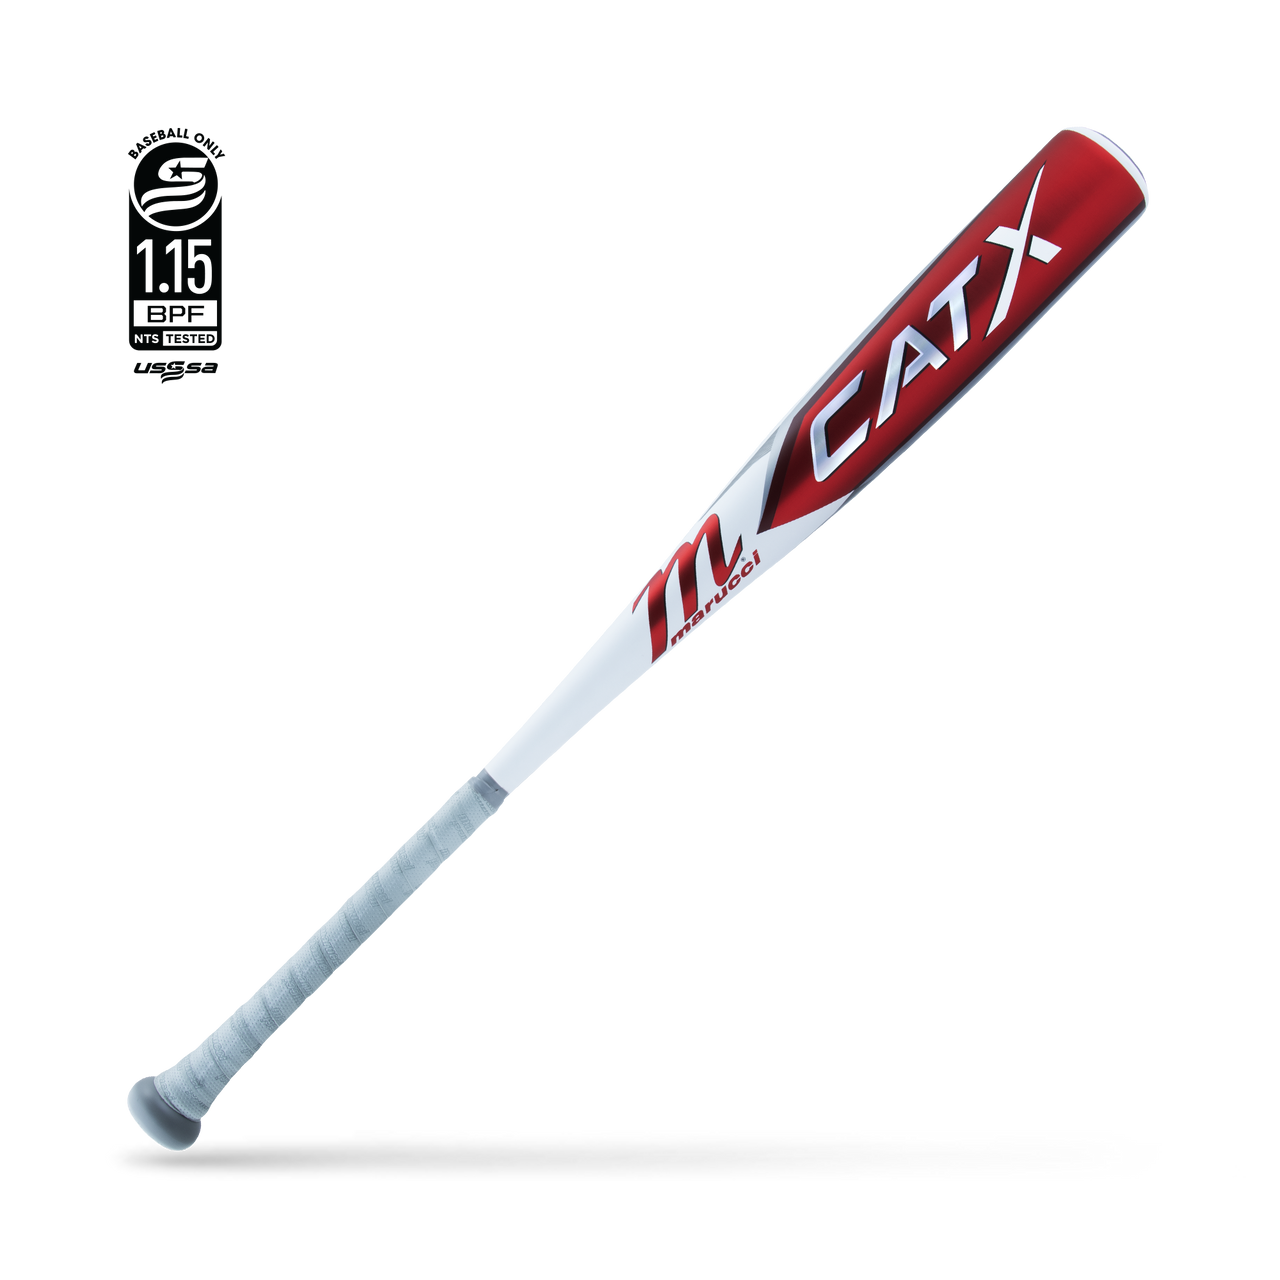 Marucci CATX SL (-5) Baseball Bat (MSBCX5)